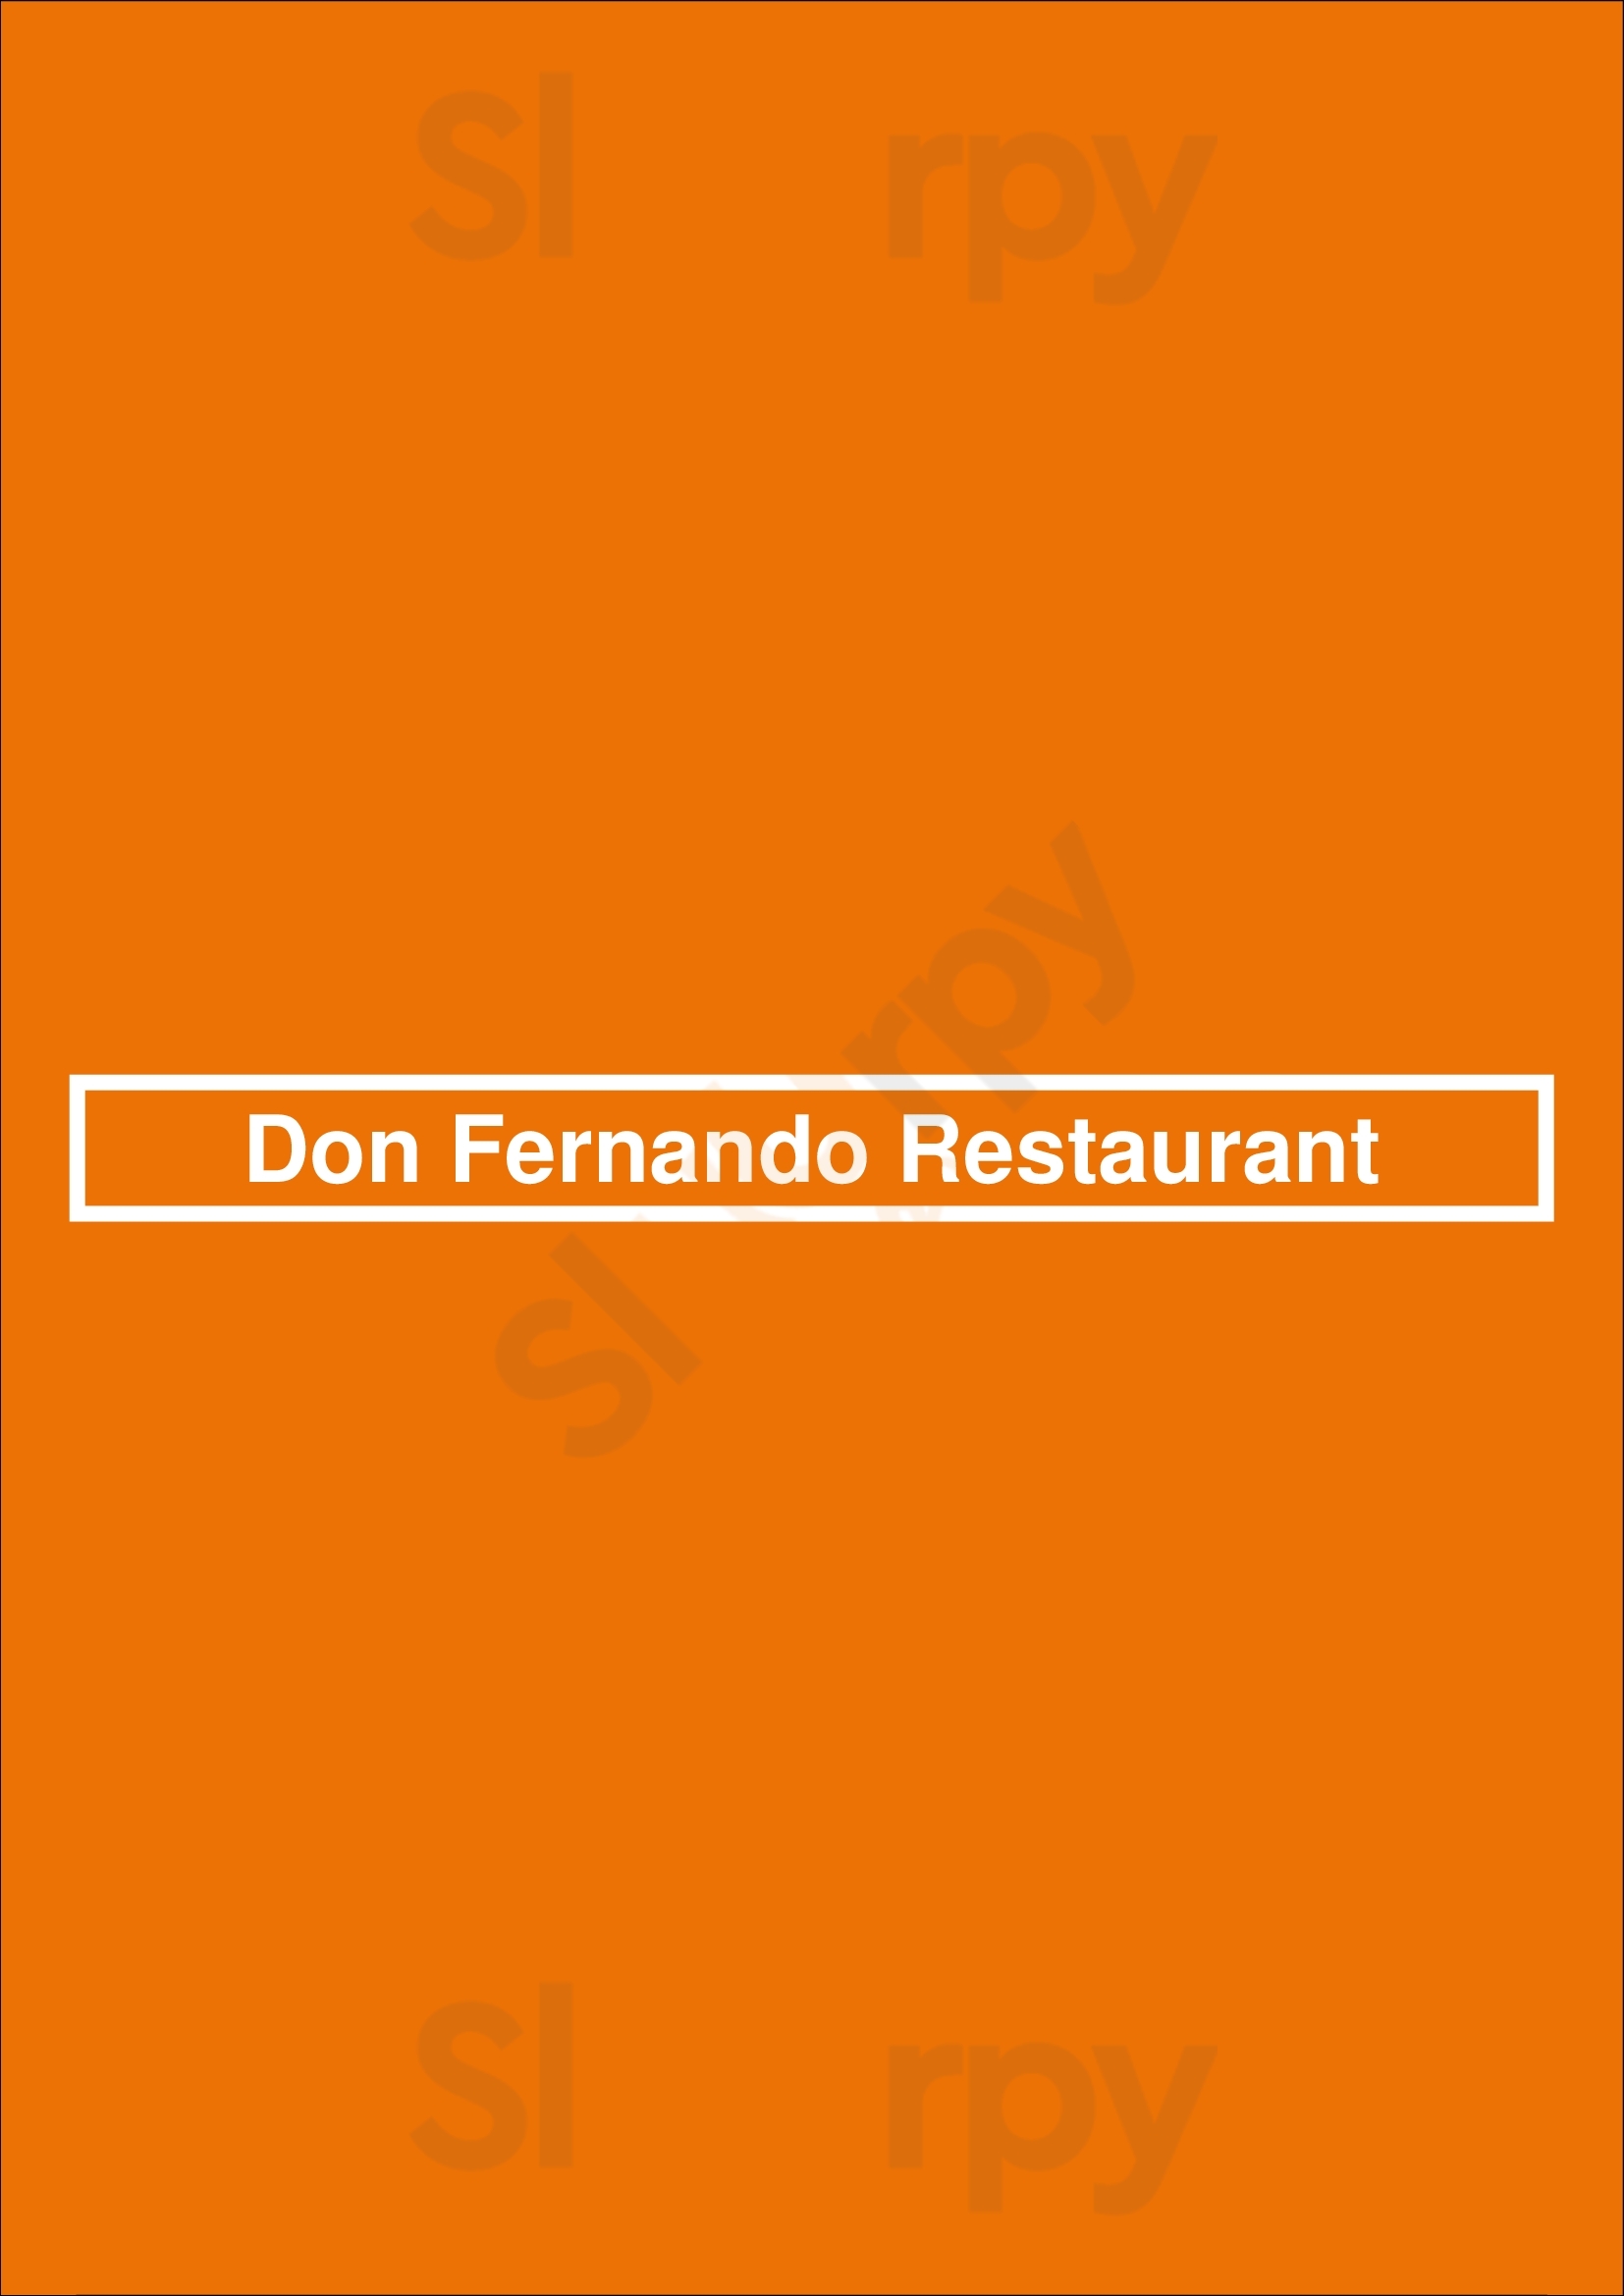 Don Fernando Restaurant Newburgh Menu - 1